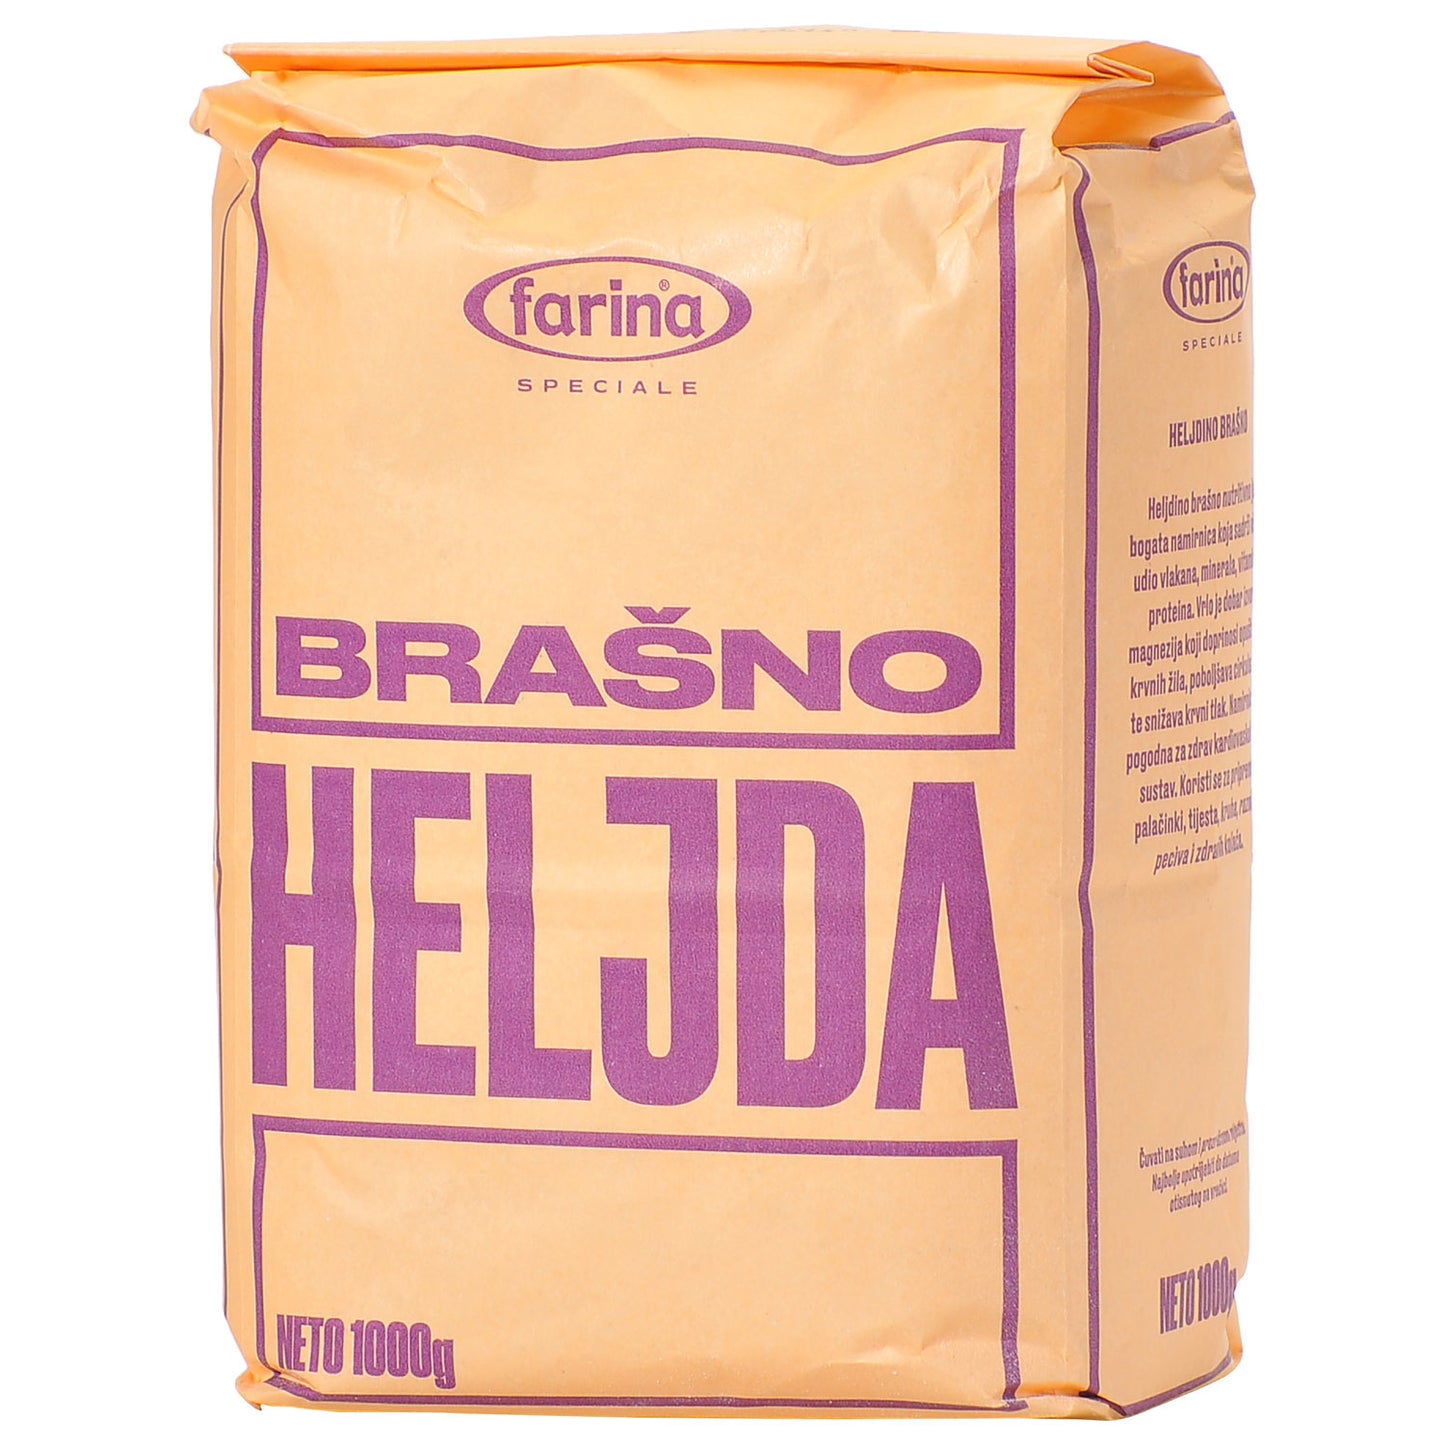 Farina Heljdino brasno - 1kg